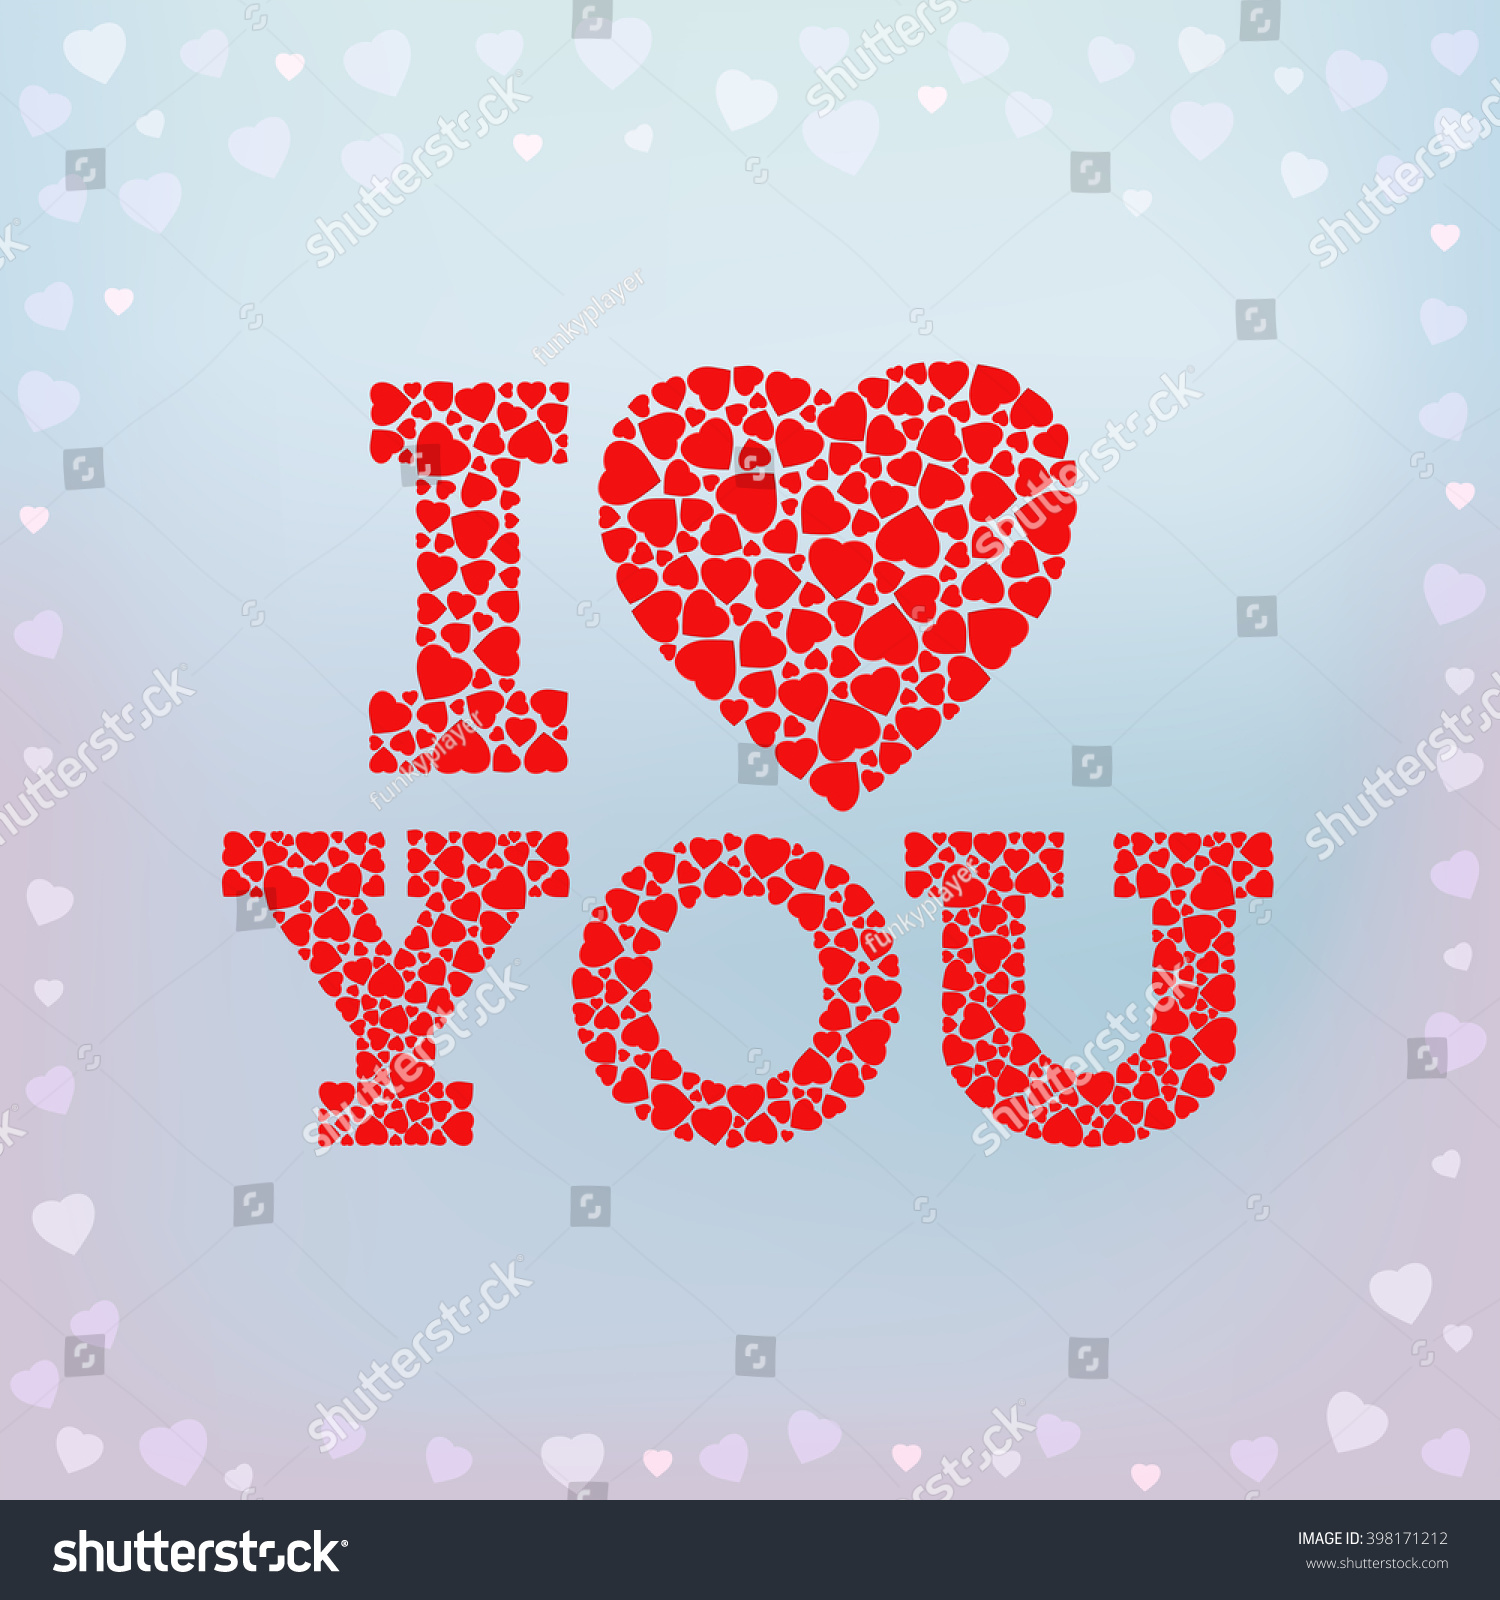 Love You Inscription Heart Symbol Made Stock Vector HD (Royalty Free ...